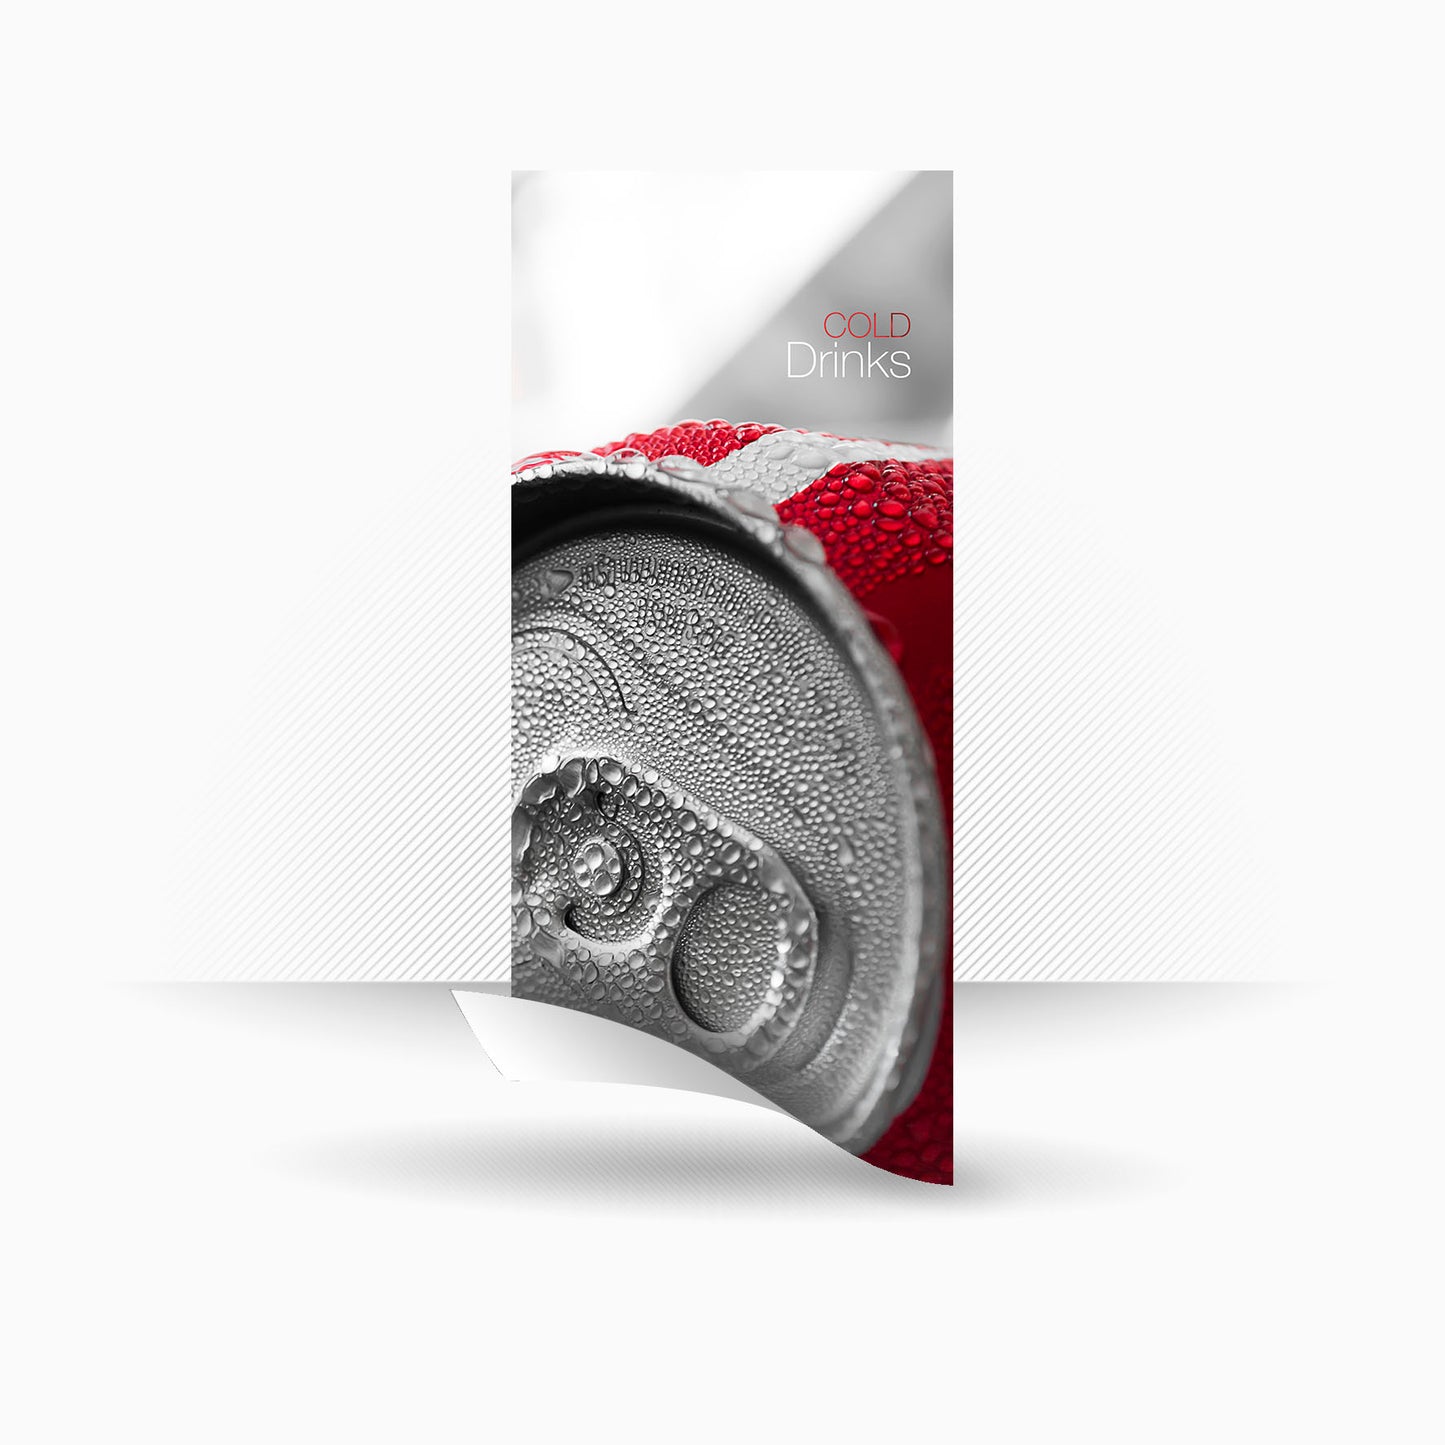 Kit Completo "Red Coke" Genérico para máquinas de refrescos